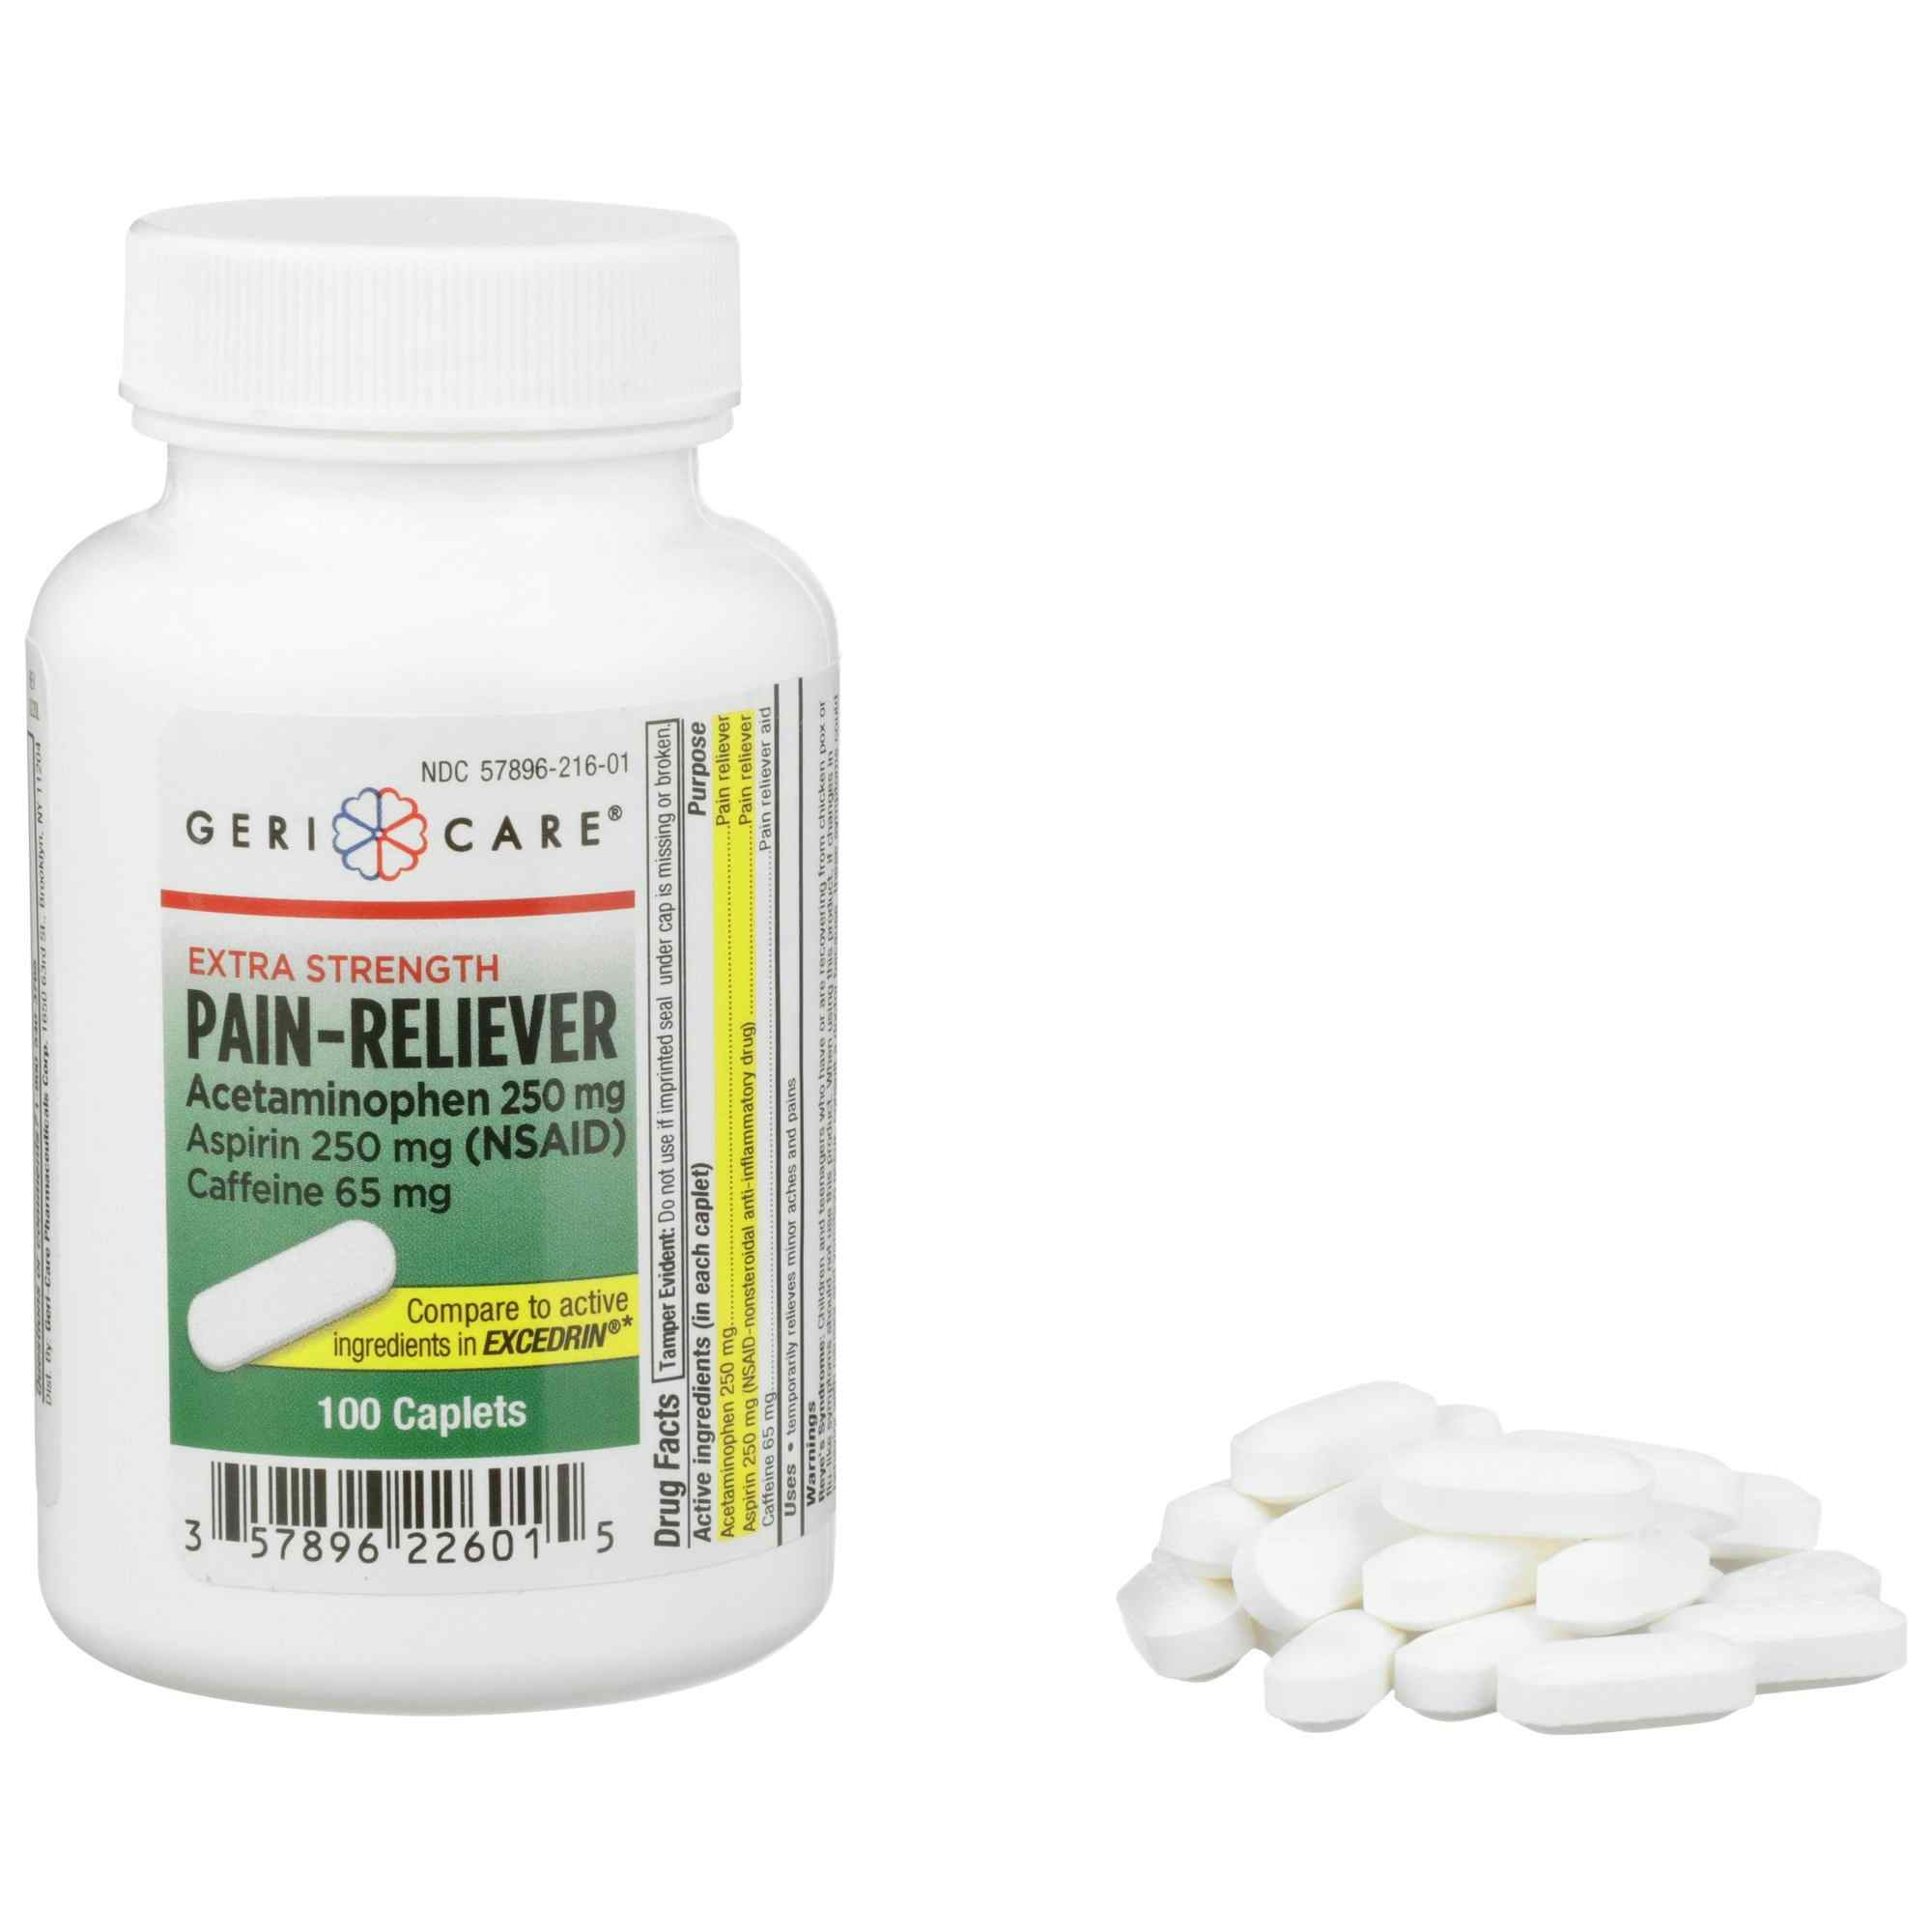 Geri-Care Extra-Strength Pain Reliever, 100 Caplets, 226-01-GCP, 1 Bottle